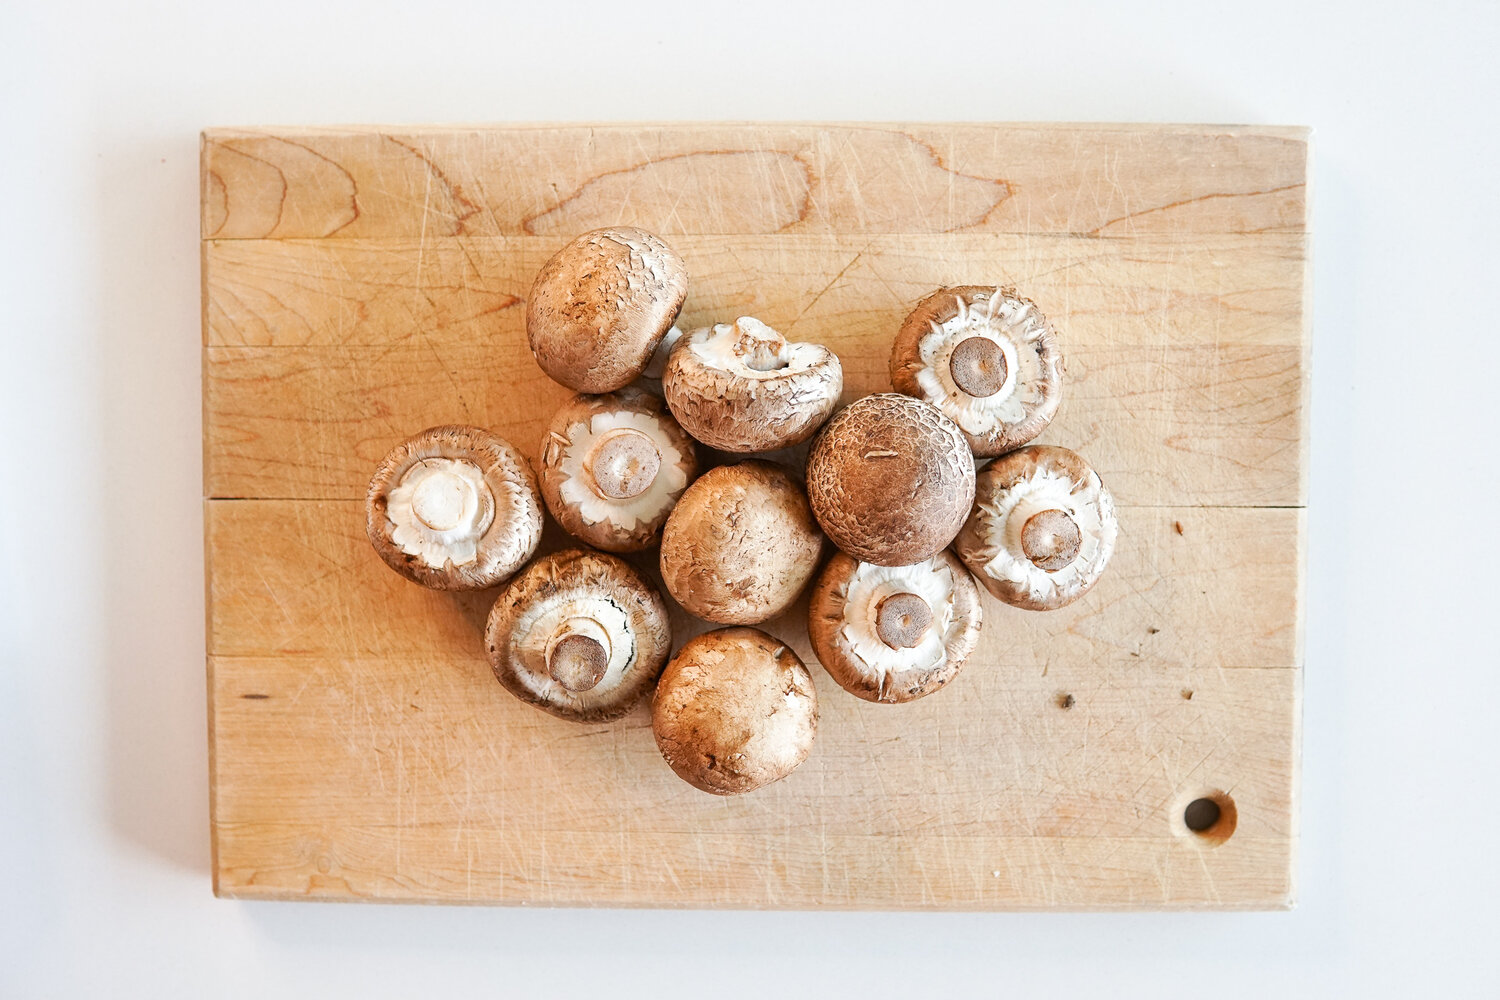 How To Prep Mushrooms